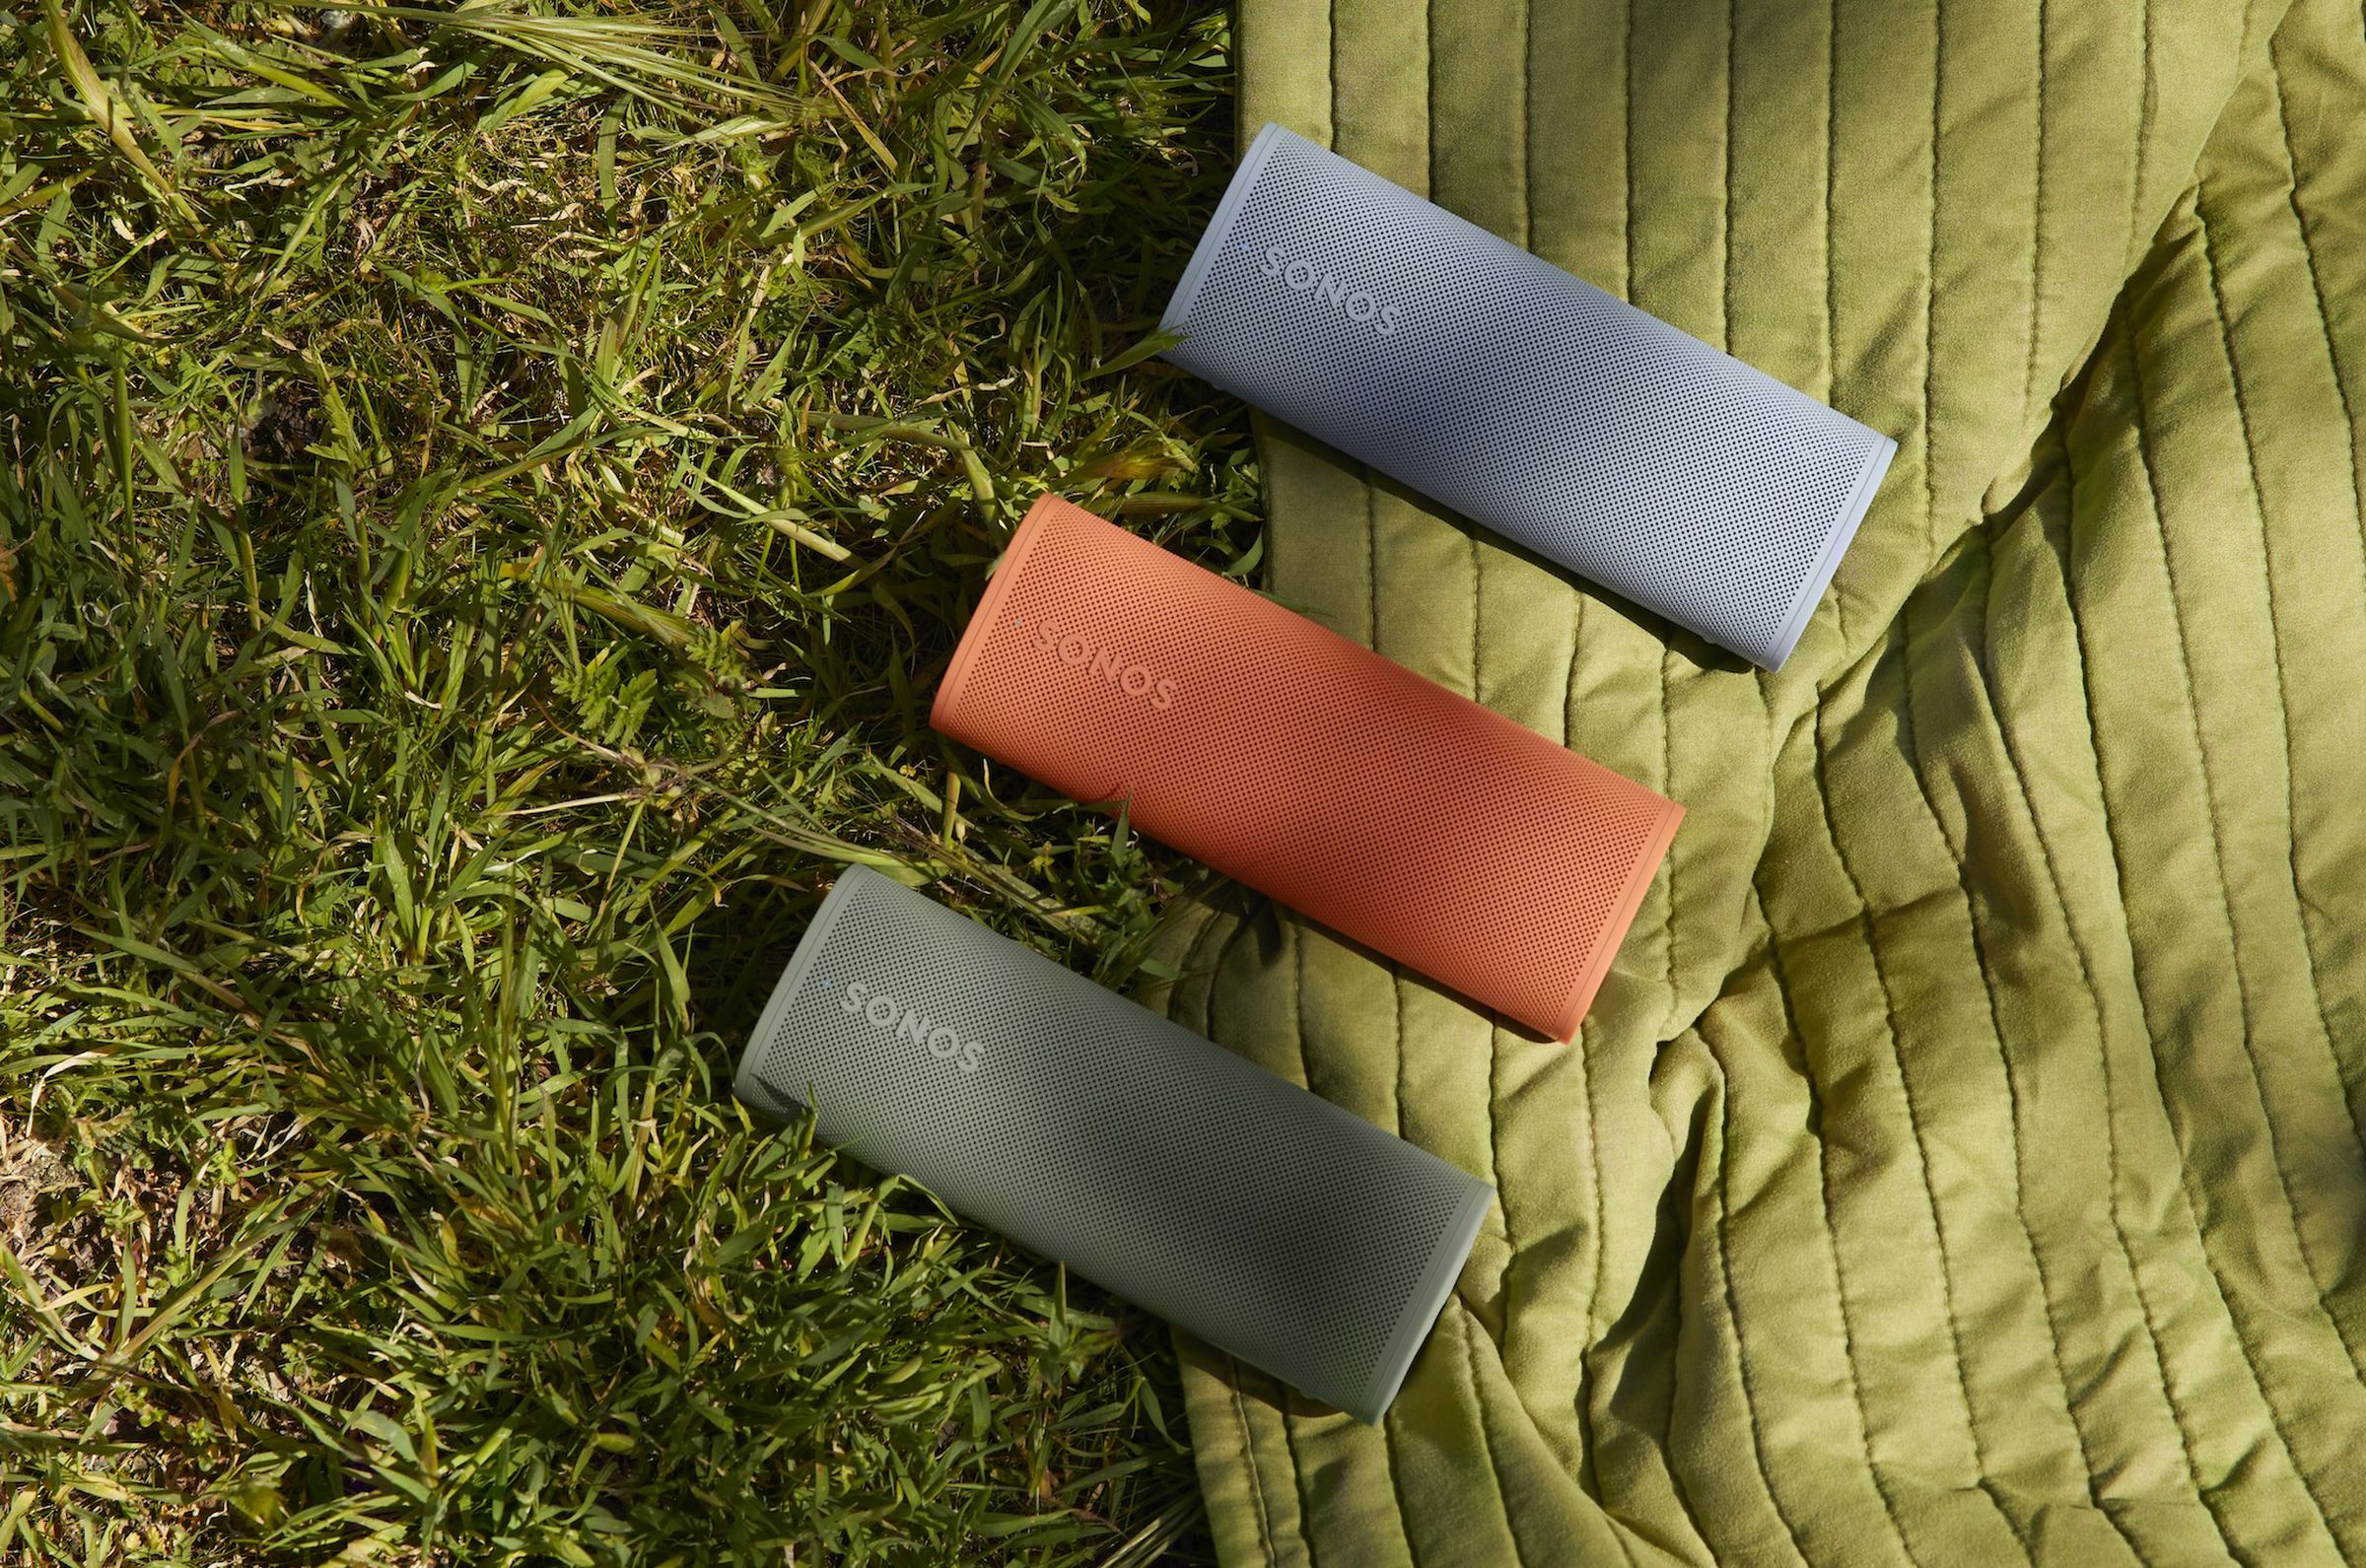 A marketing image of three Sonos Roam 2 speakers.